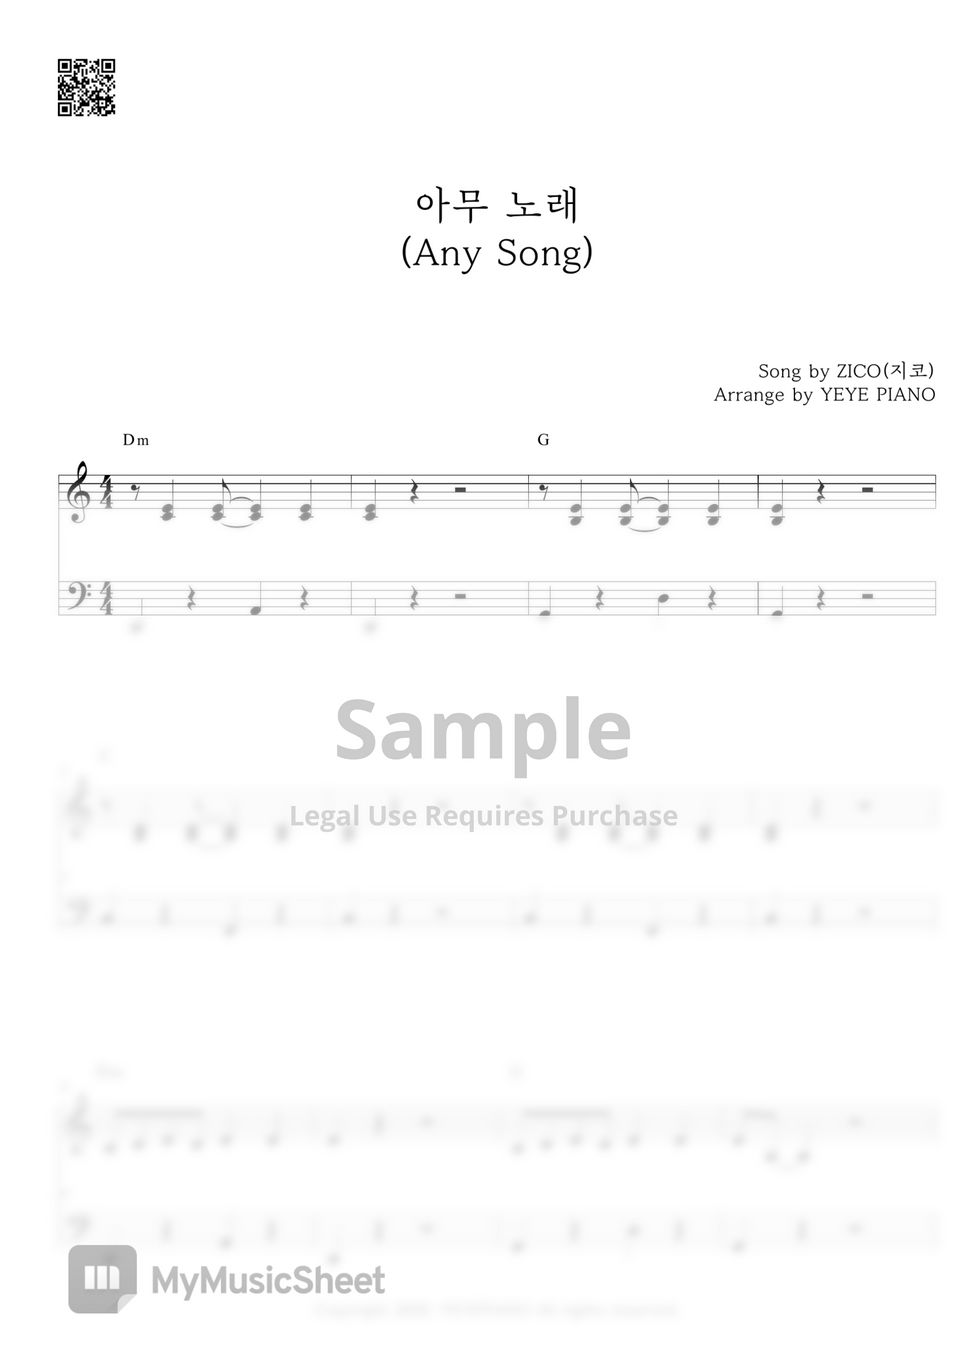 ZICO(지코) - 아무 노래(Any Song) by 예예피아노(YEYE PIANO)